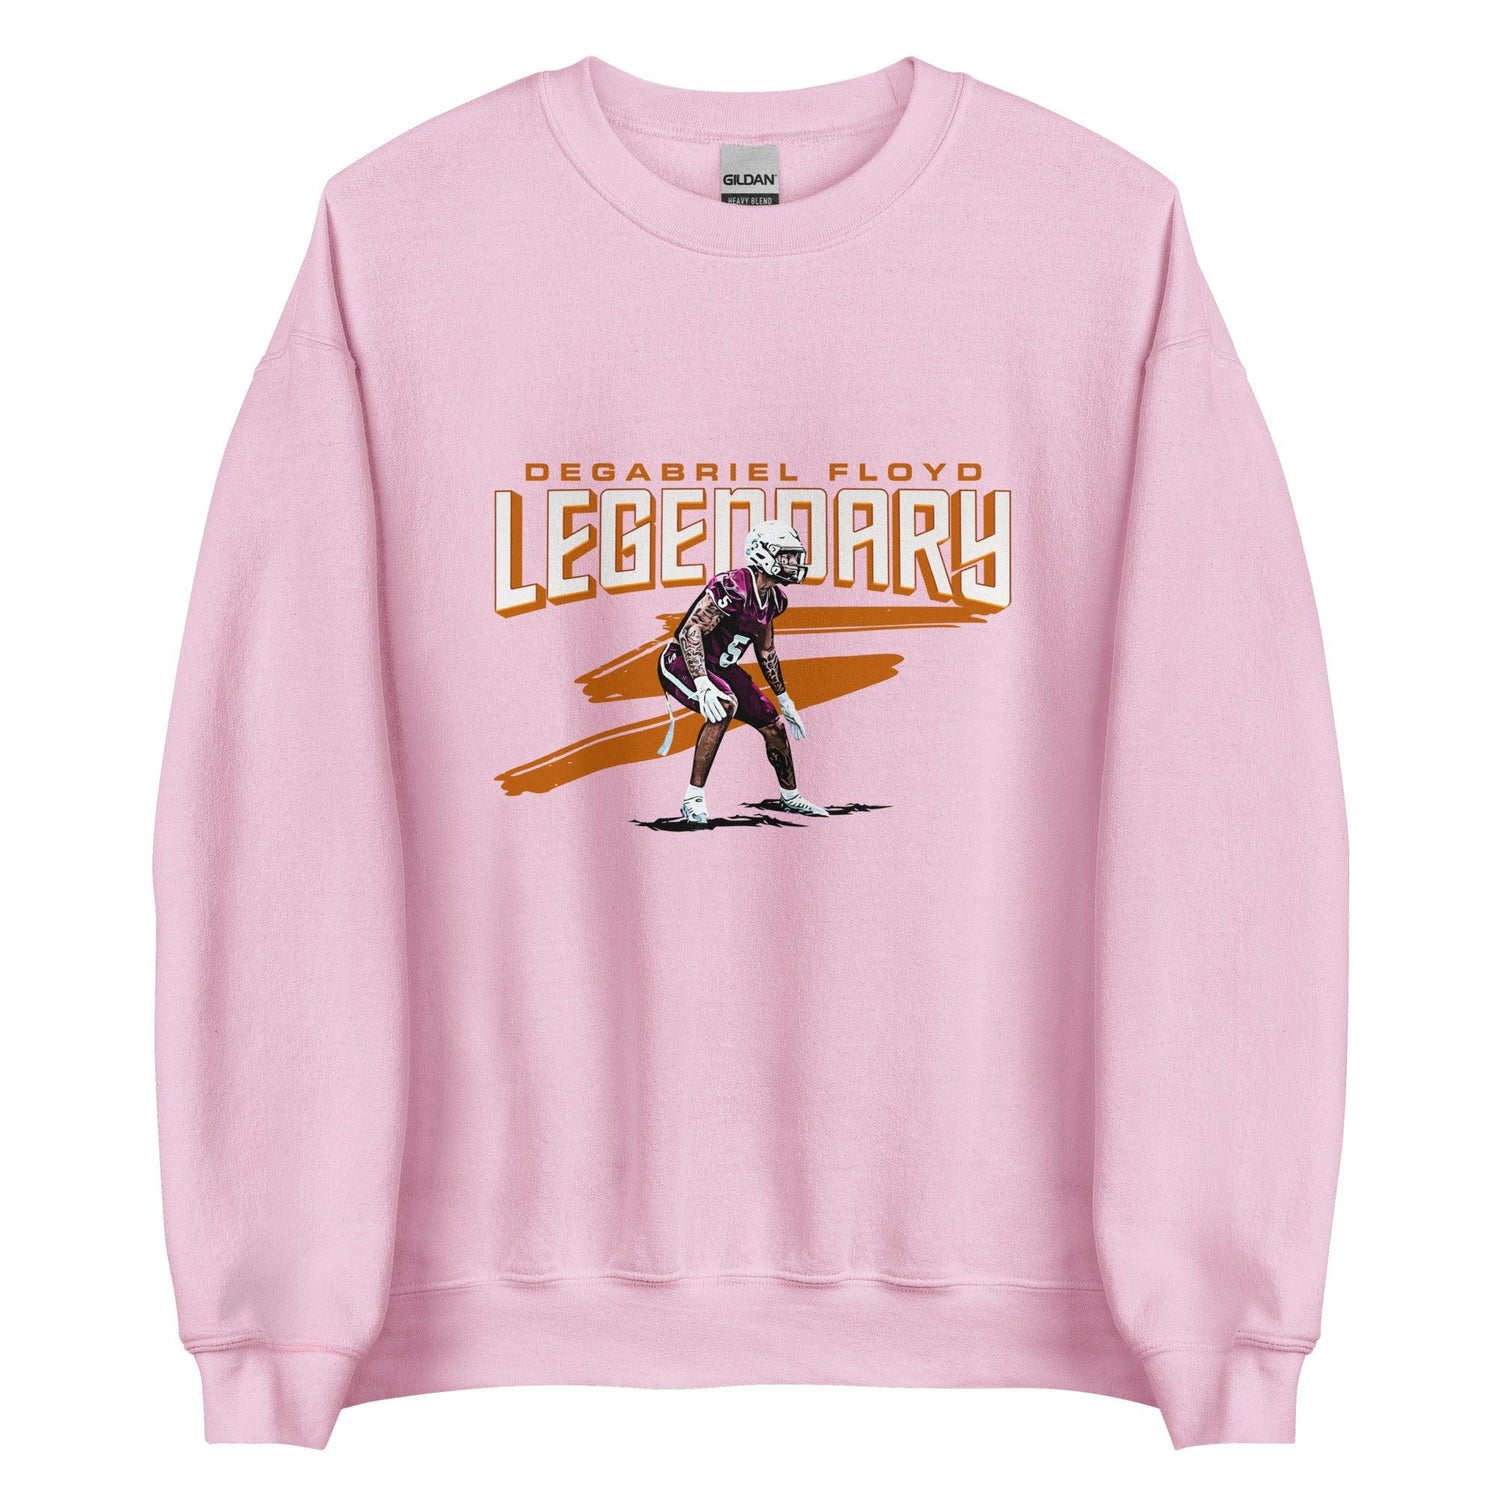 DeGabriel Floyd "Legendary" Sweatshirt - Fan Arch